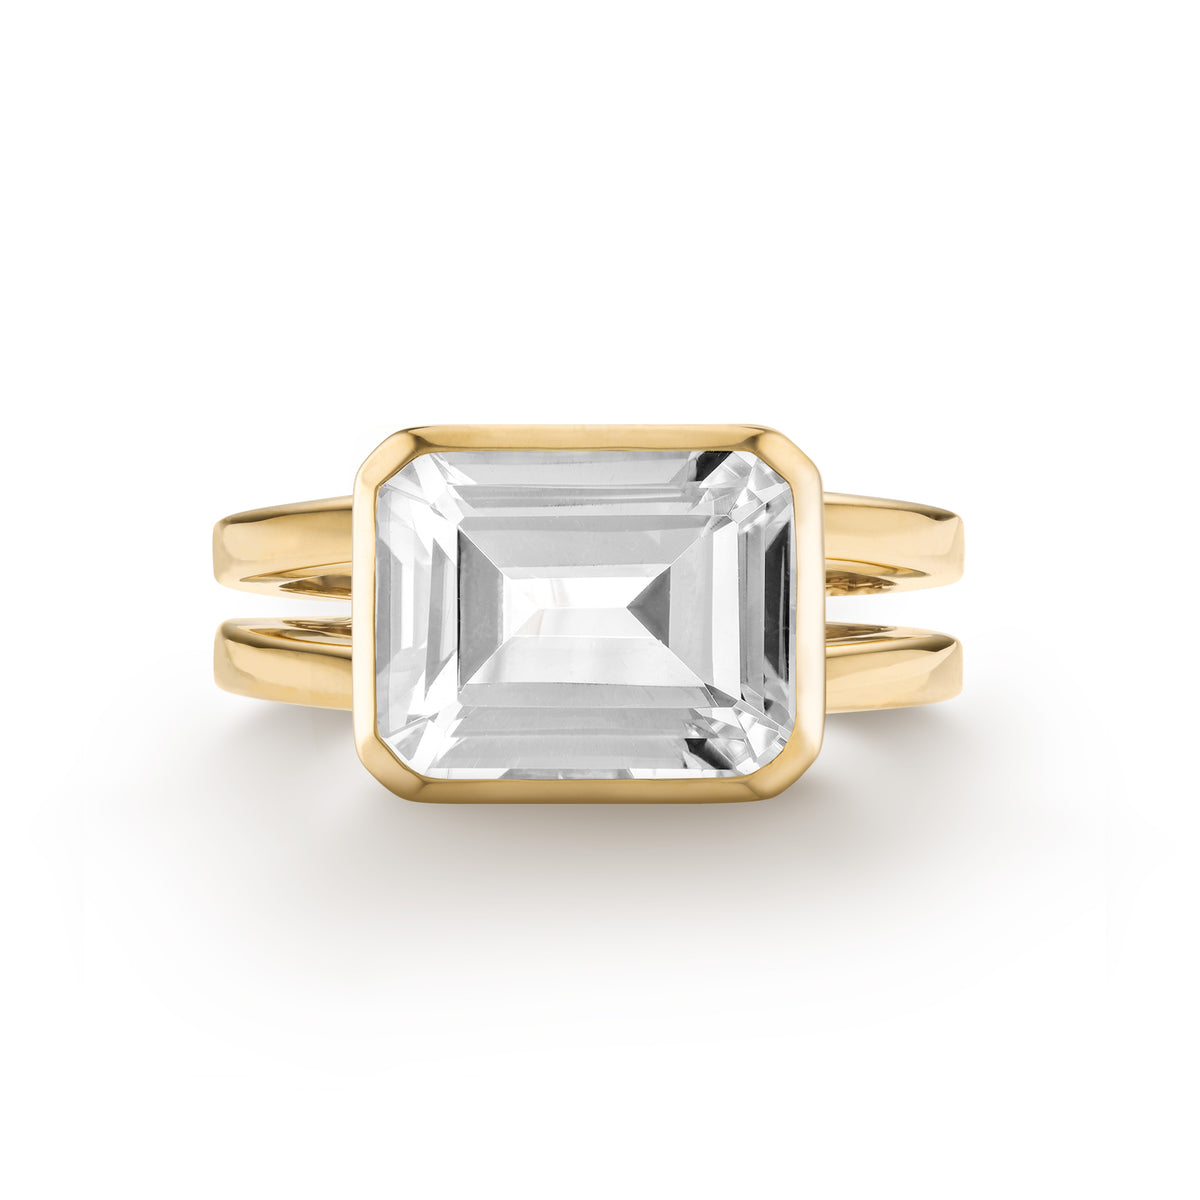 Personalized Greenwich 4 Birthstone & Diamond Ring in 14k Gold